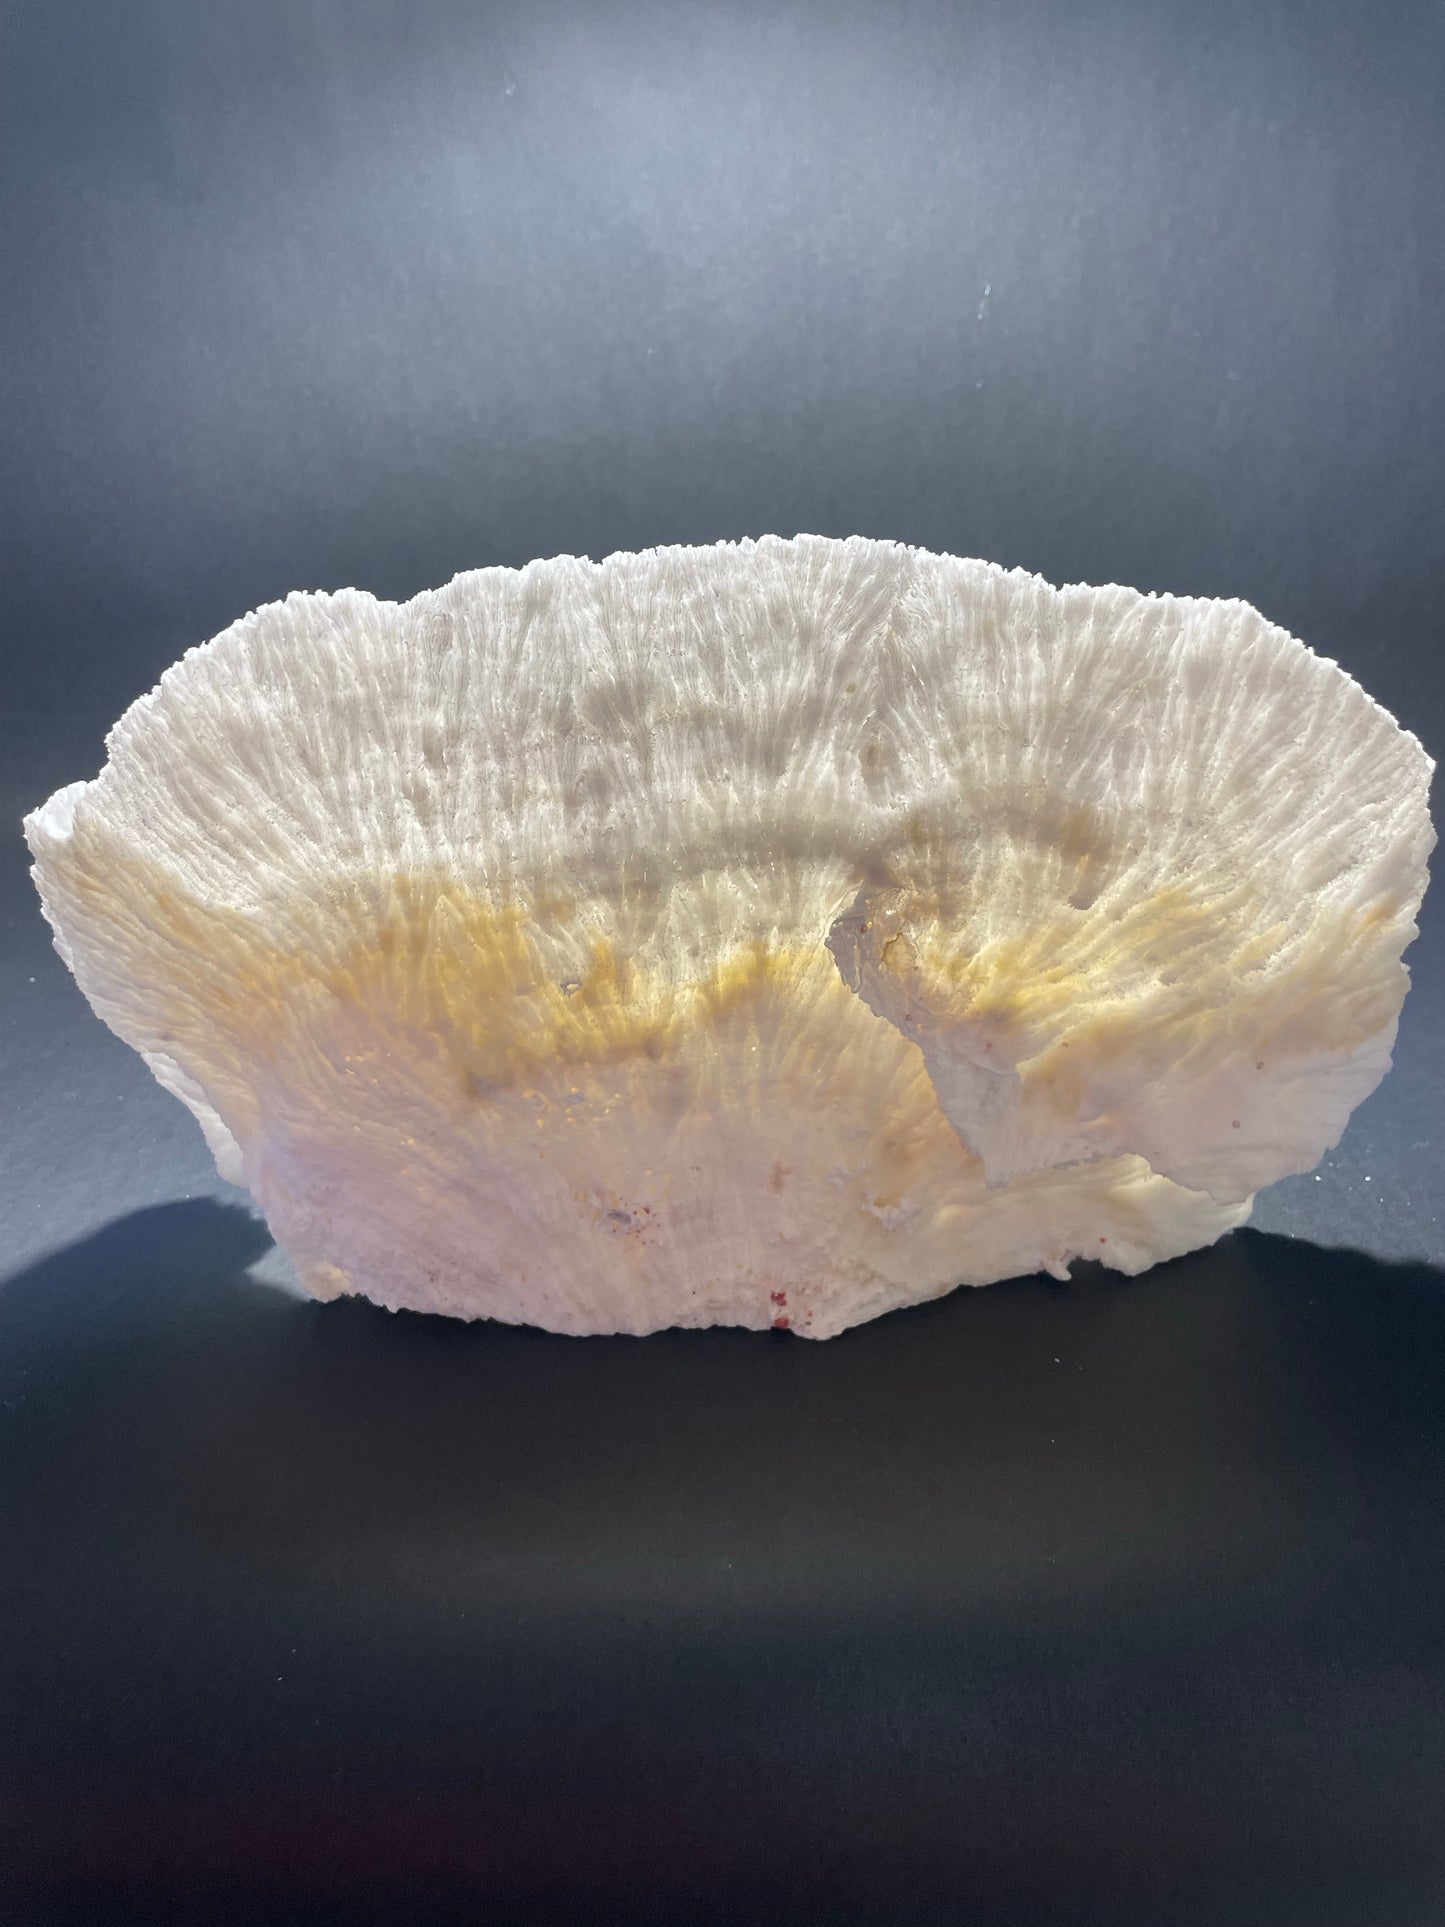 Merulina Coral (13"x7"x4”)